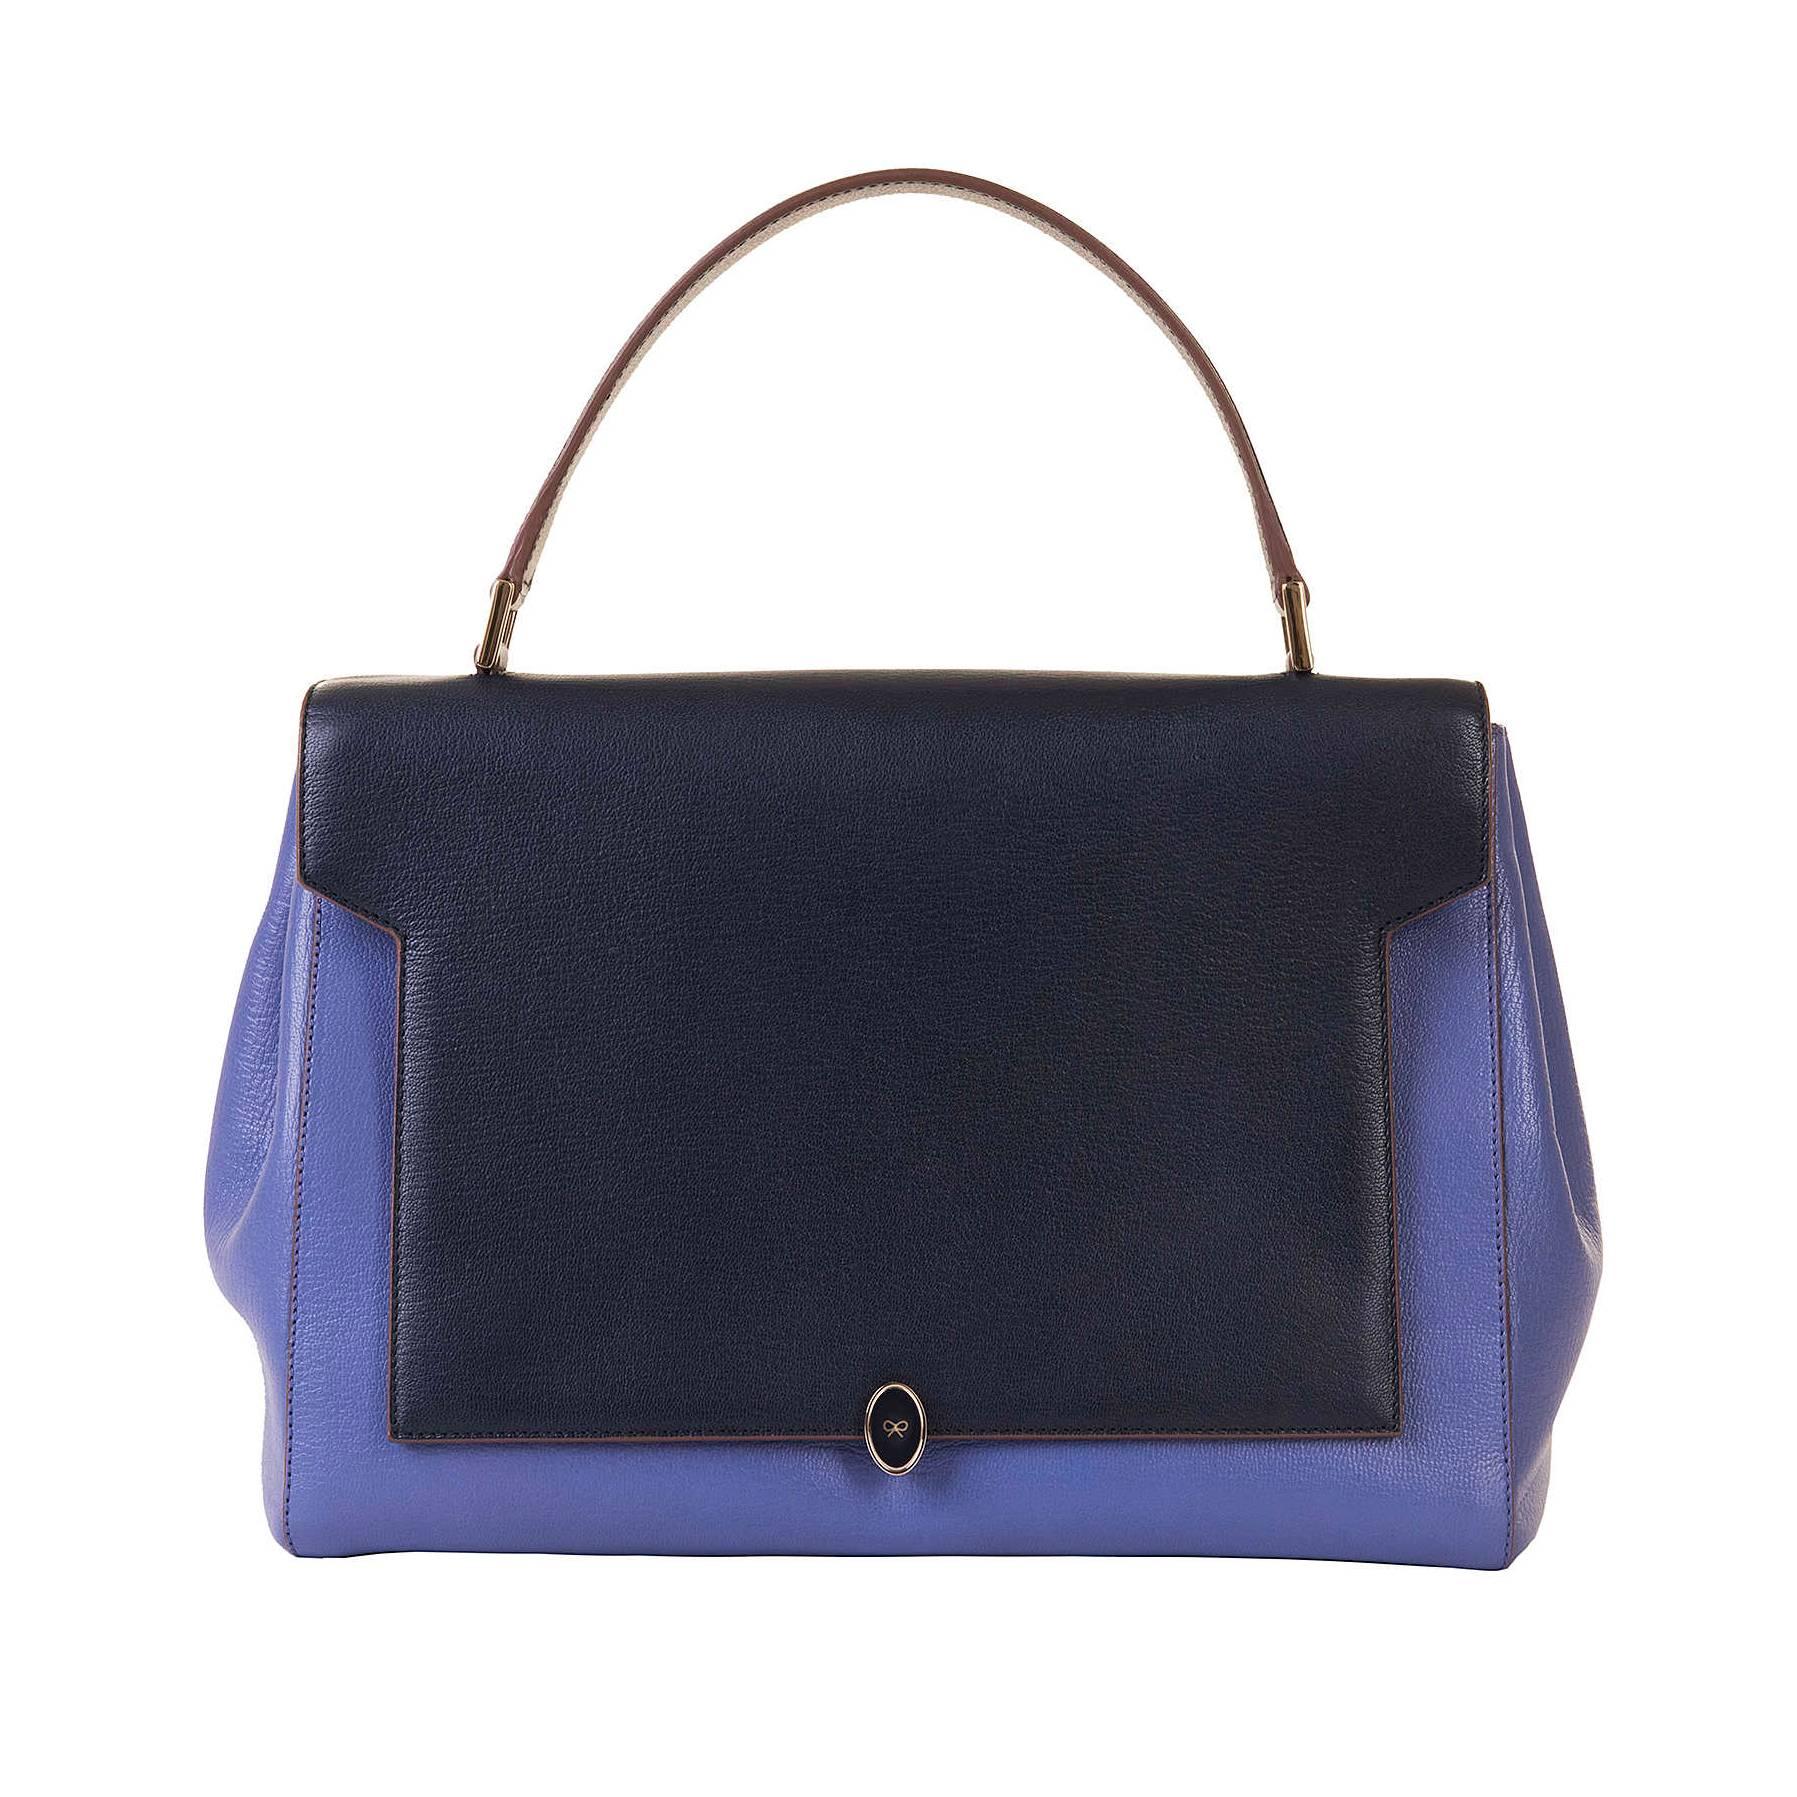 NEW & UNUSED Fabulous Anya Hindmarsh 'Bathurst' GM Bag & Matching Purse For Sale